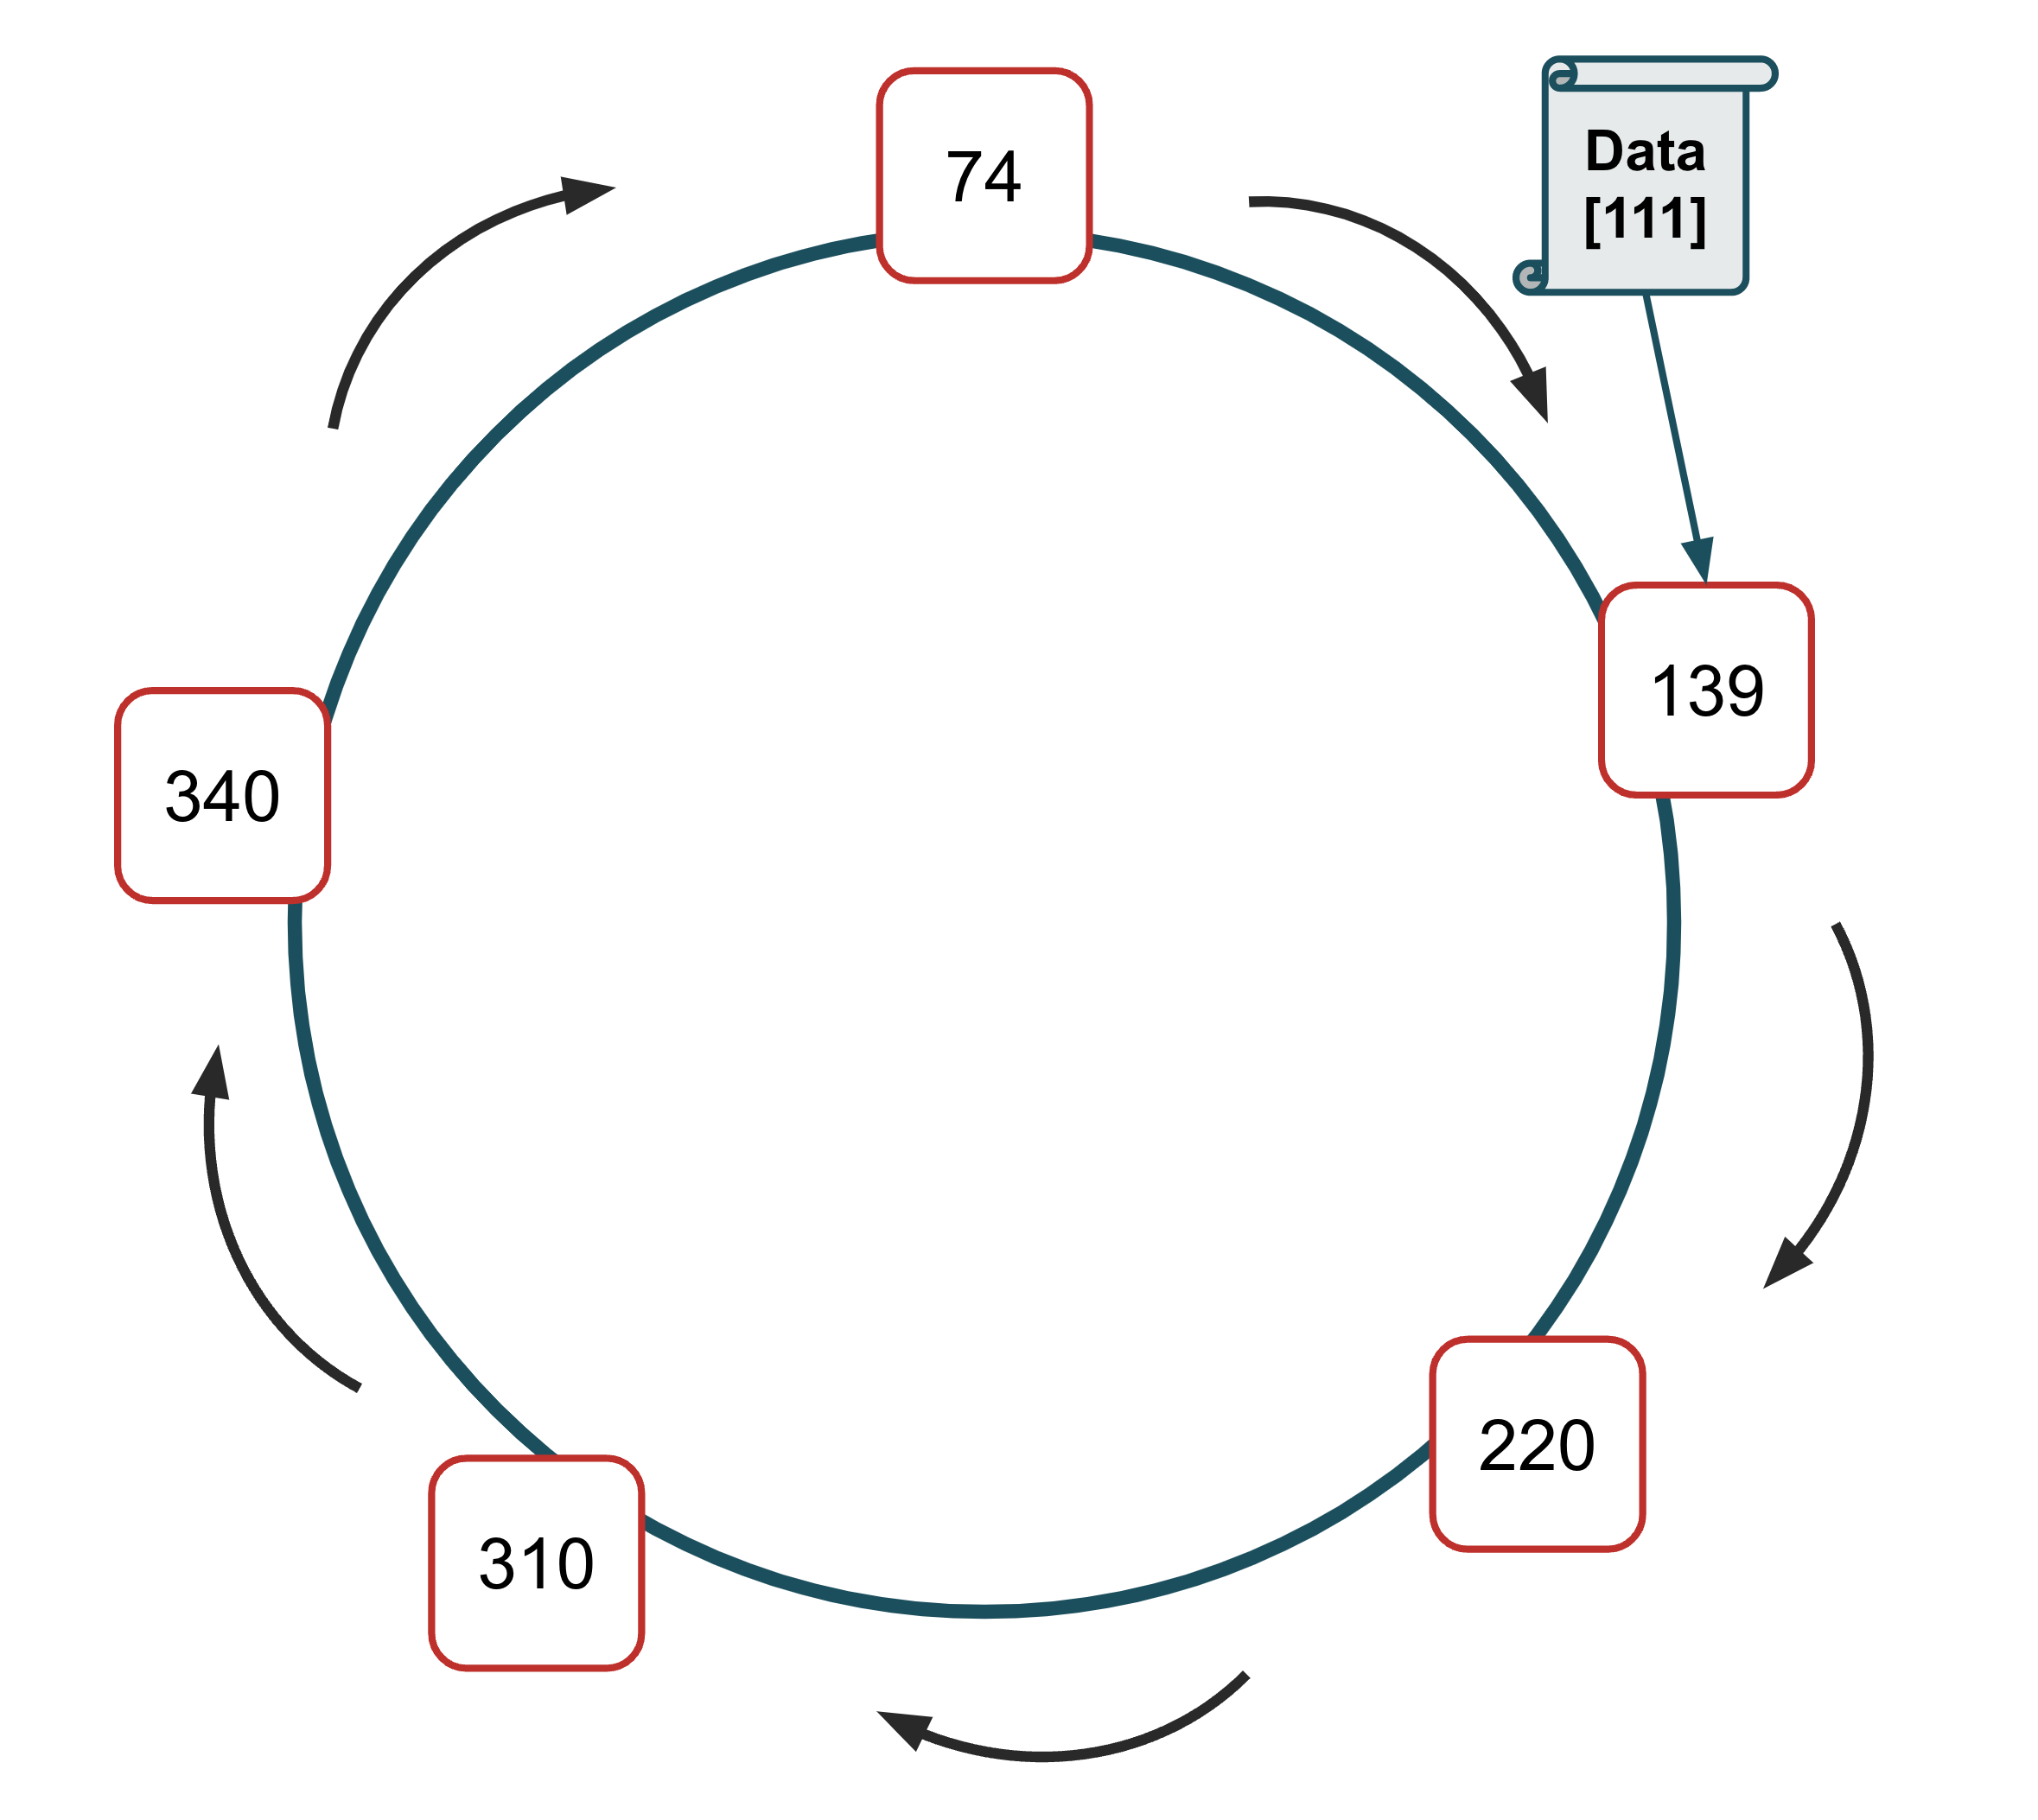 Consistent Hashing Implementation Diagram 2